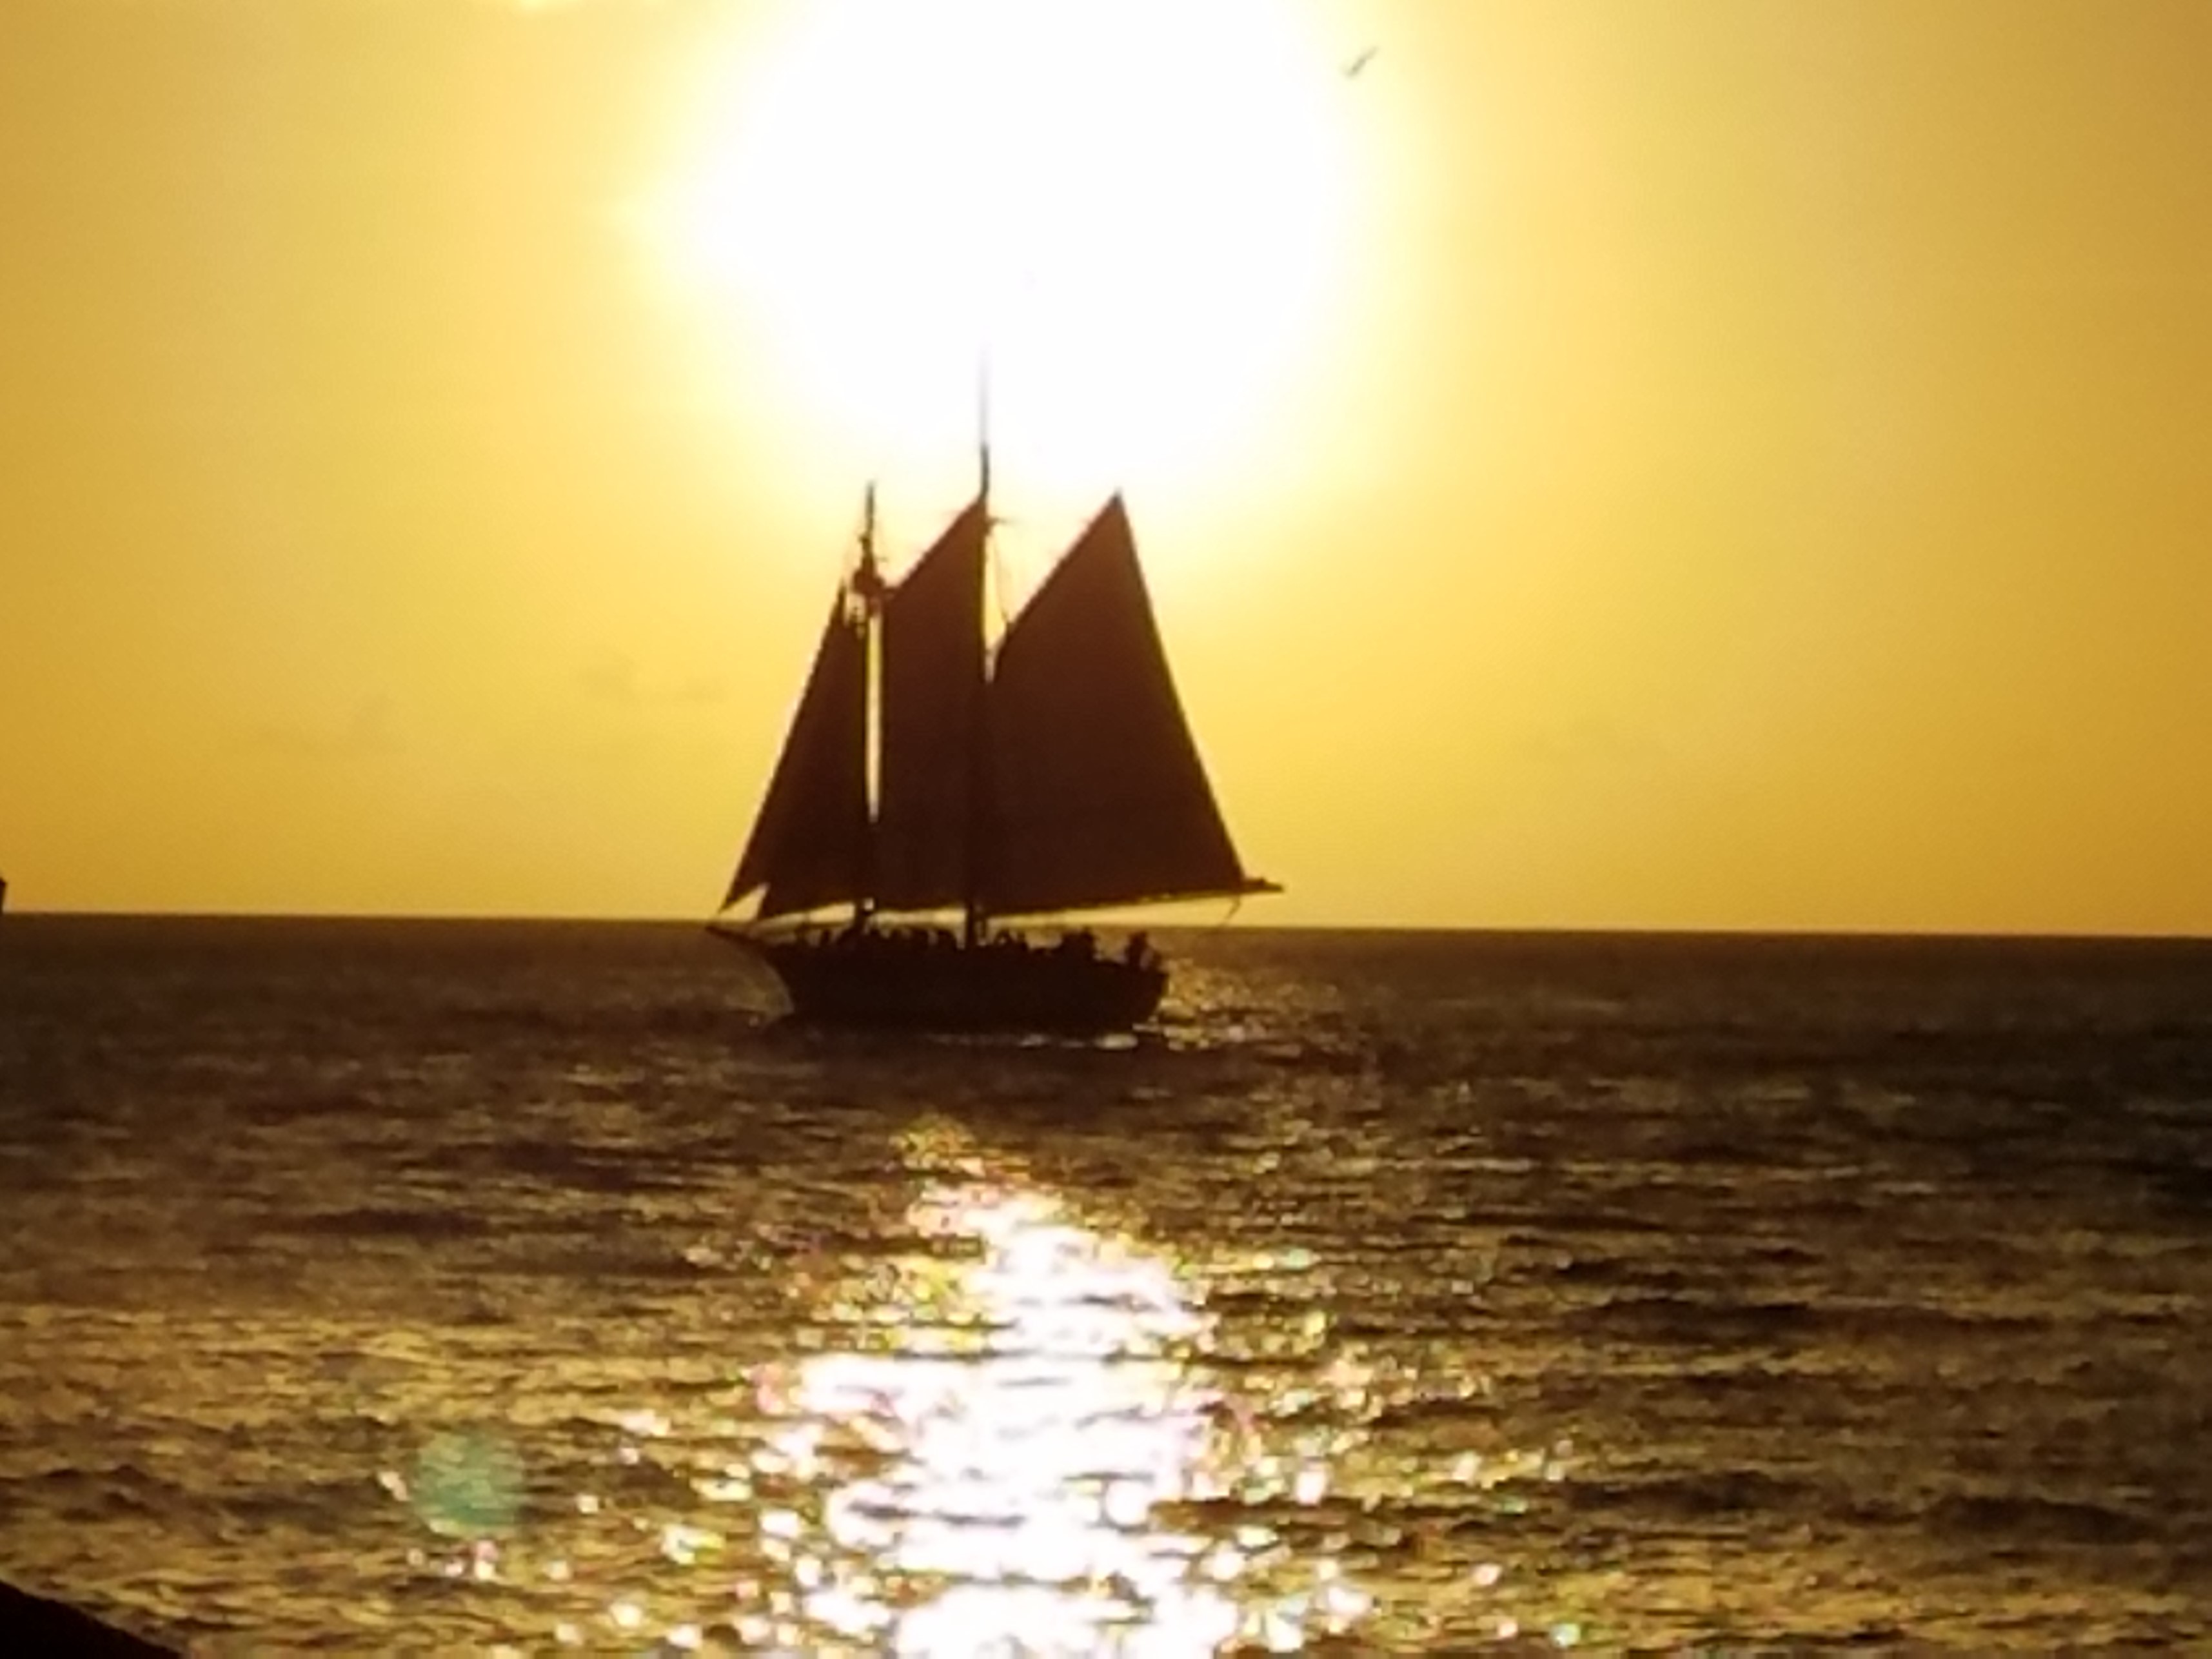 Sailing into Sunset